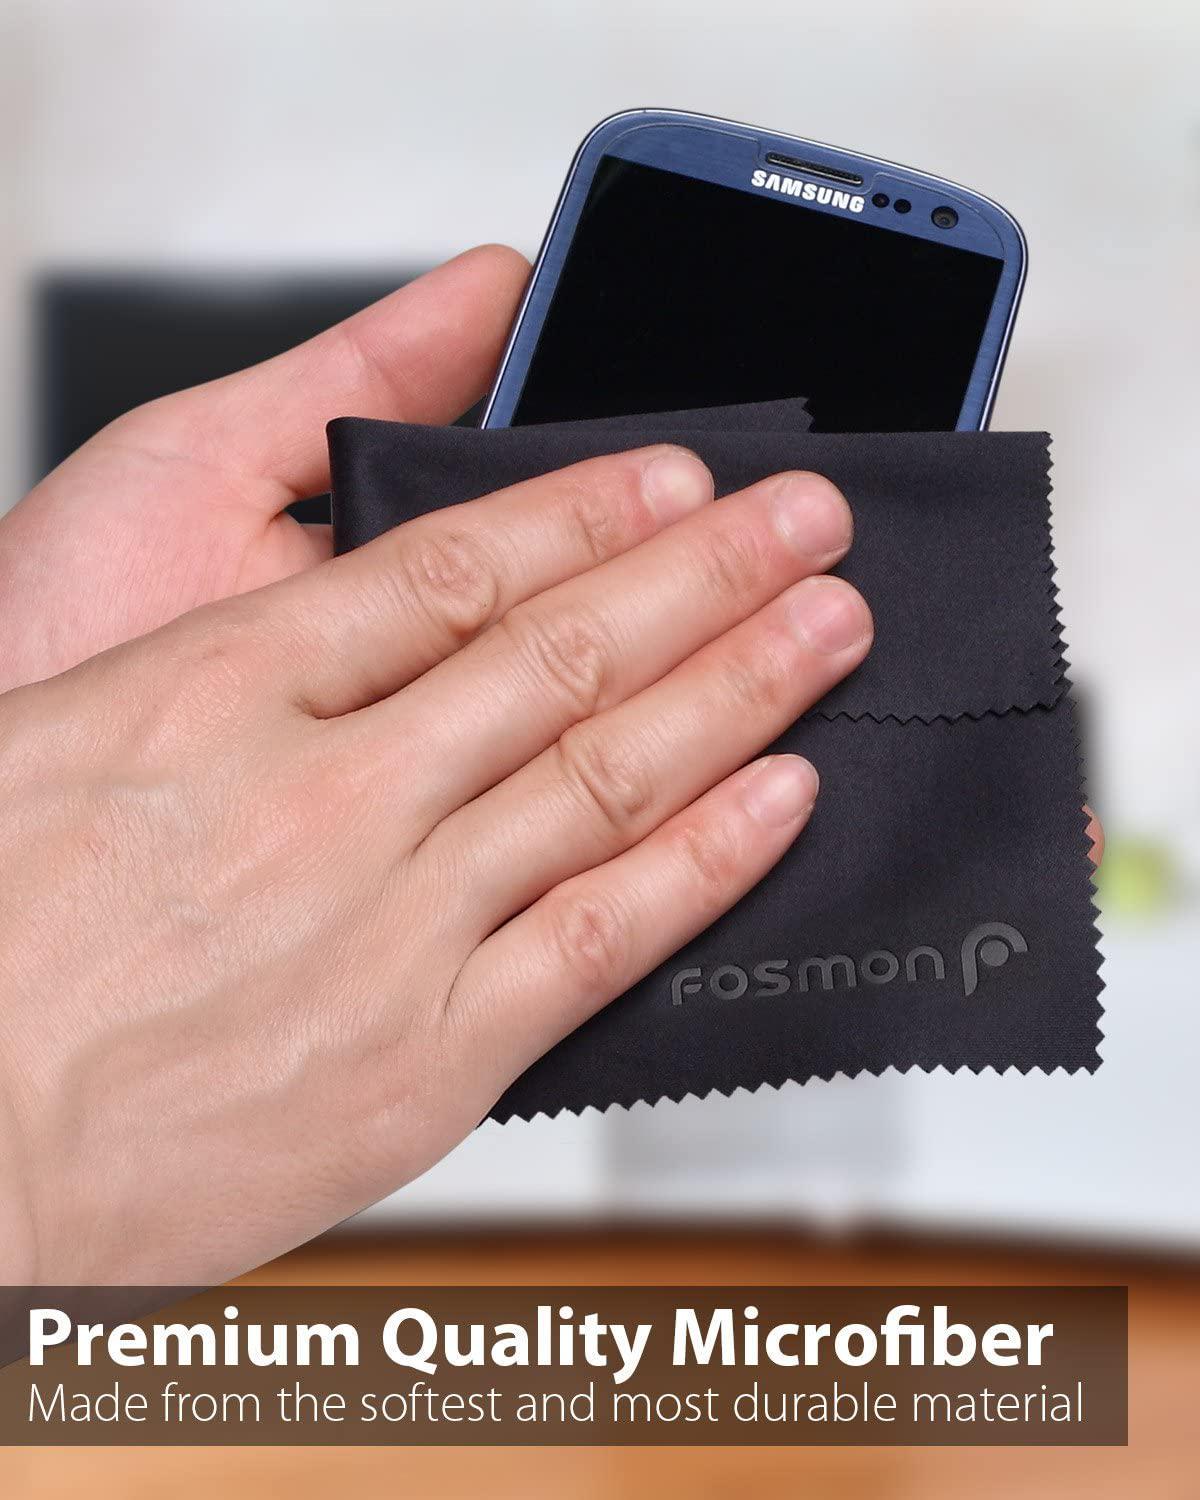 Fosmon, Microfiber Cleaning Cloths, Fosmon 15-Pack of Microfiber Cleaning Cloths [6 x 7 inches / 15.2 x 17.8 cm] (Black)